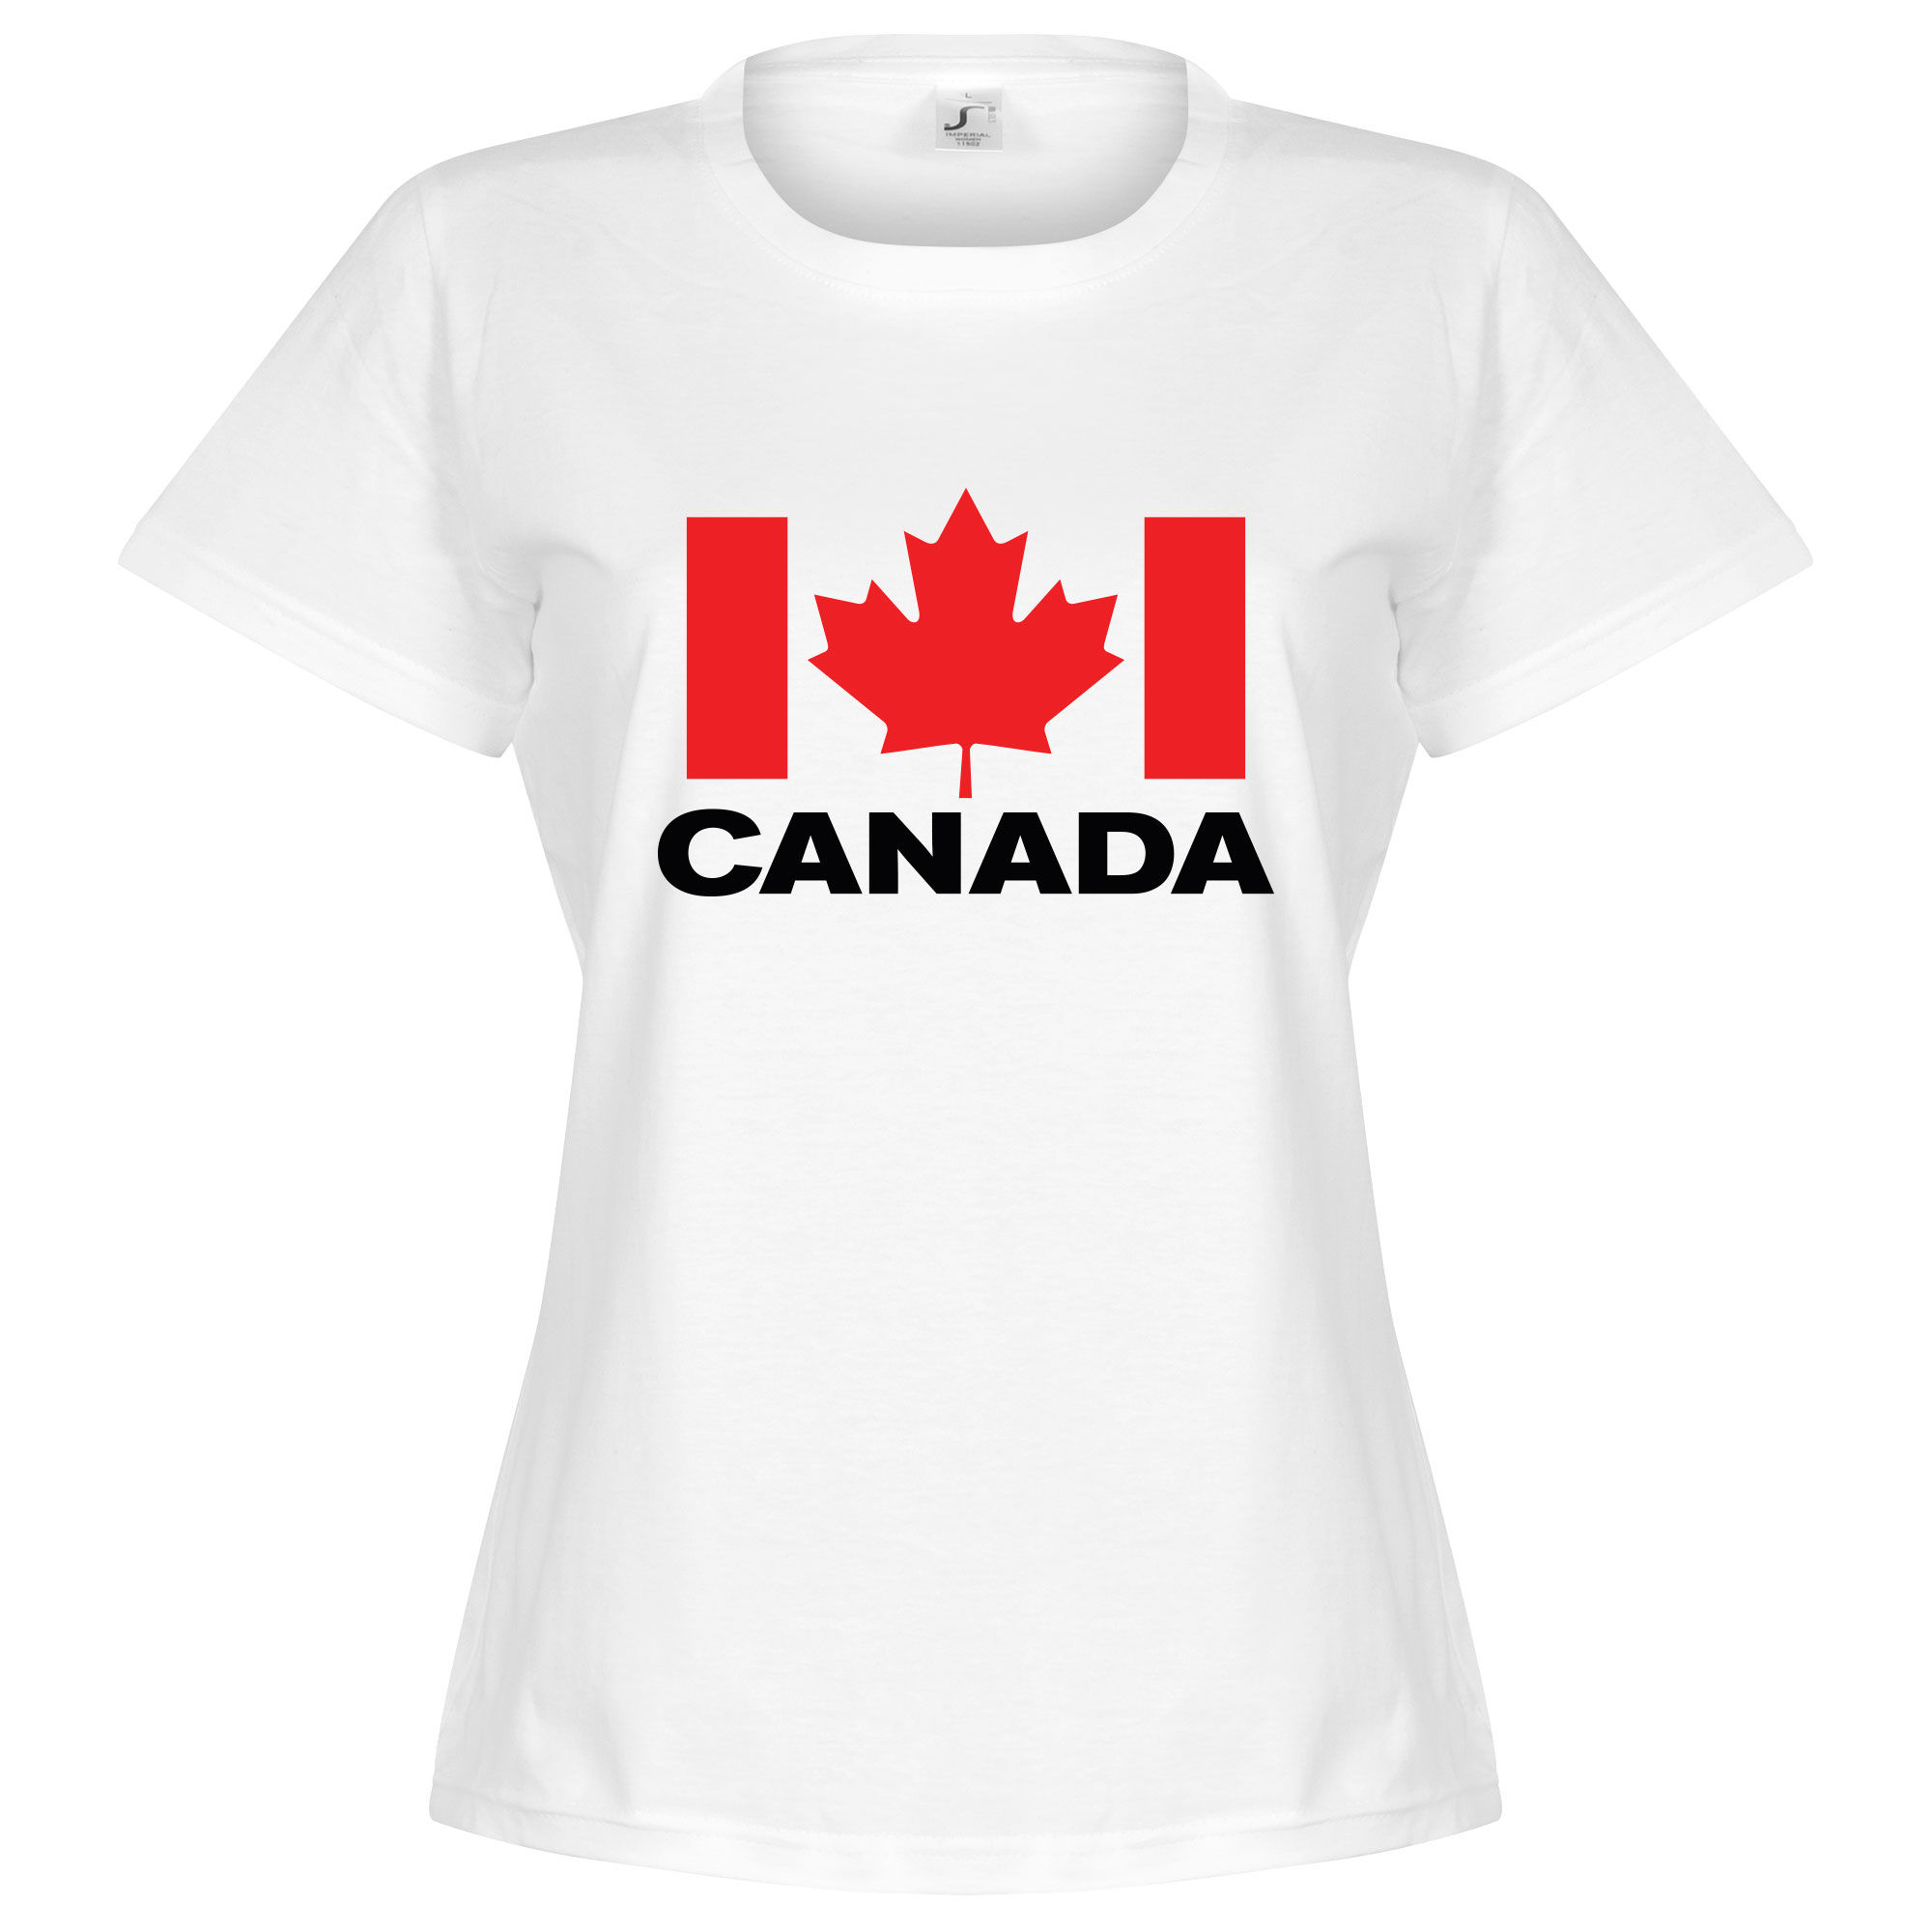 Kanada - Tričko dámské - bílé